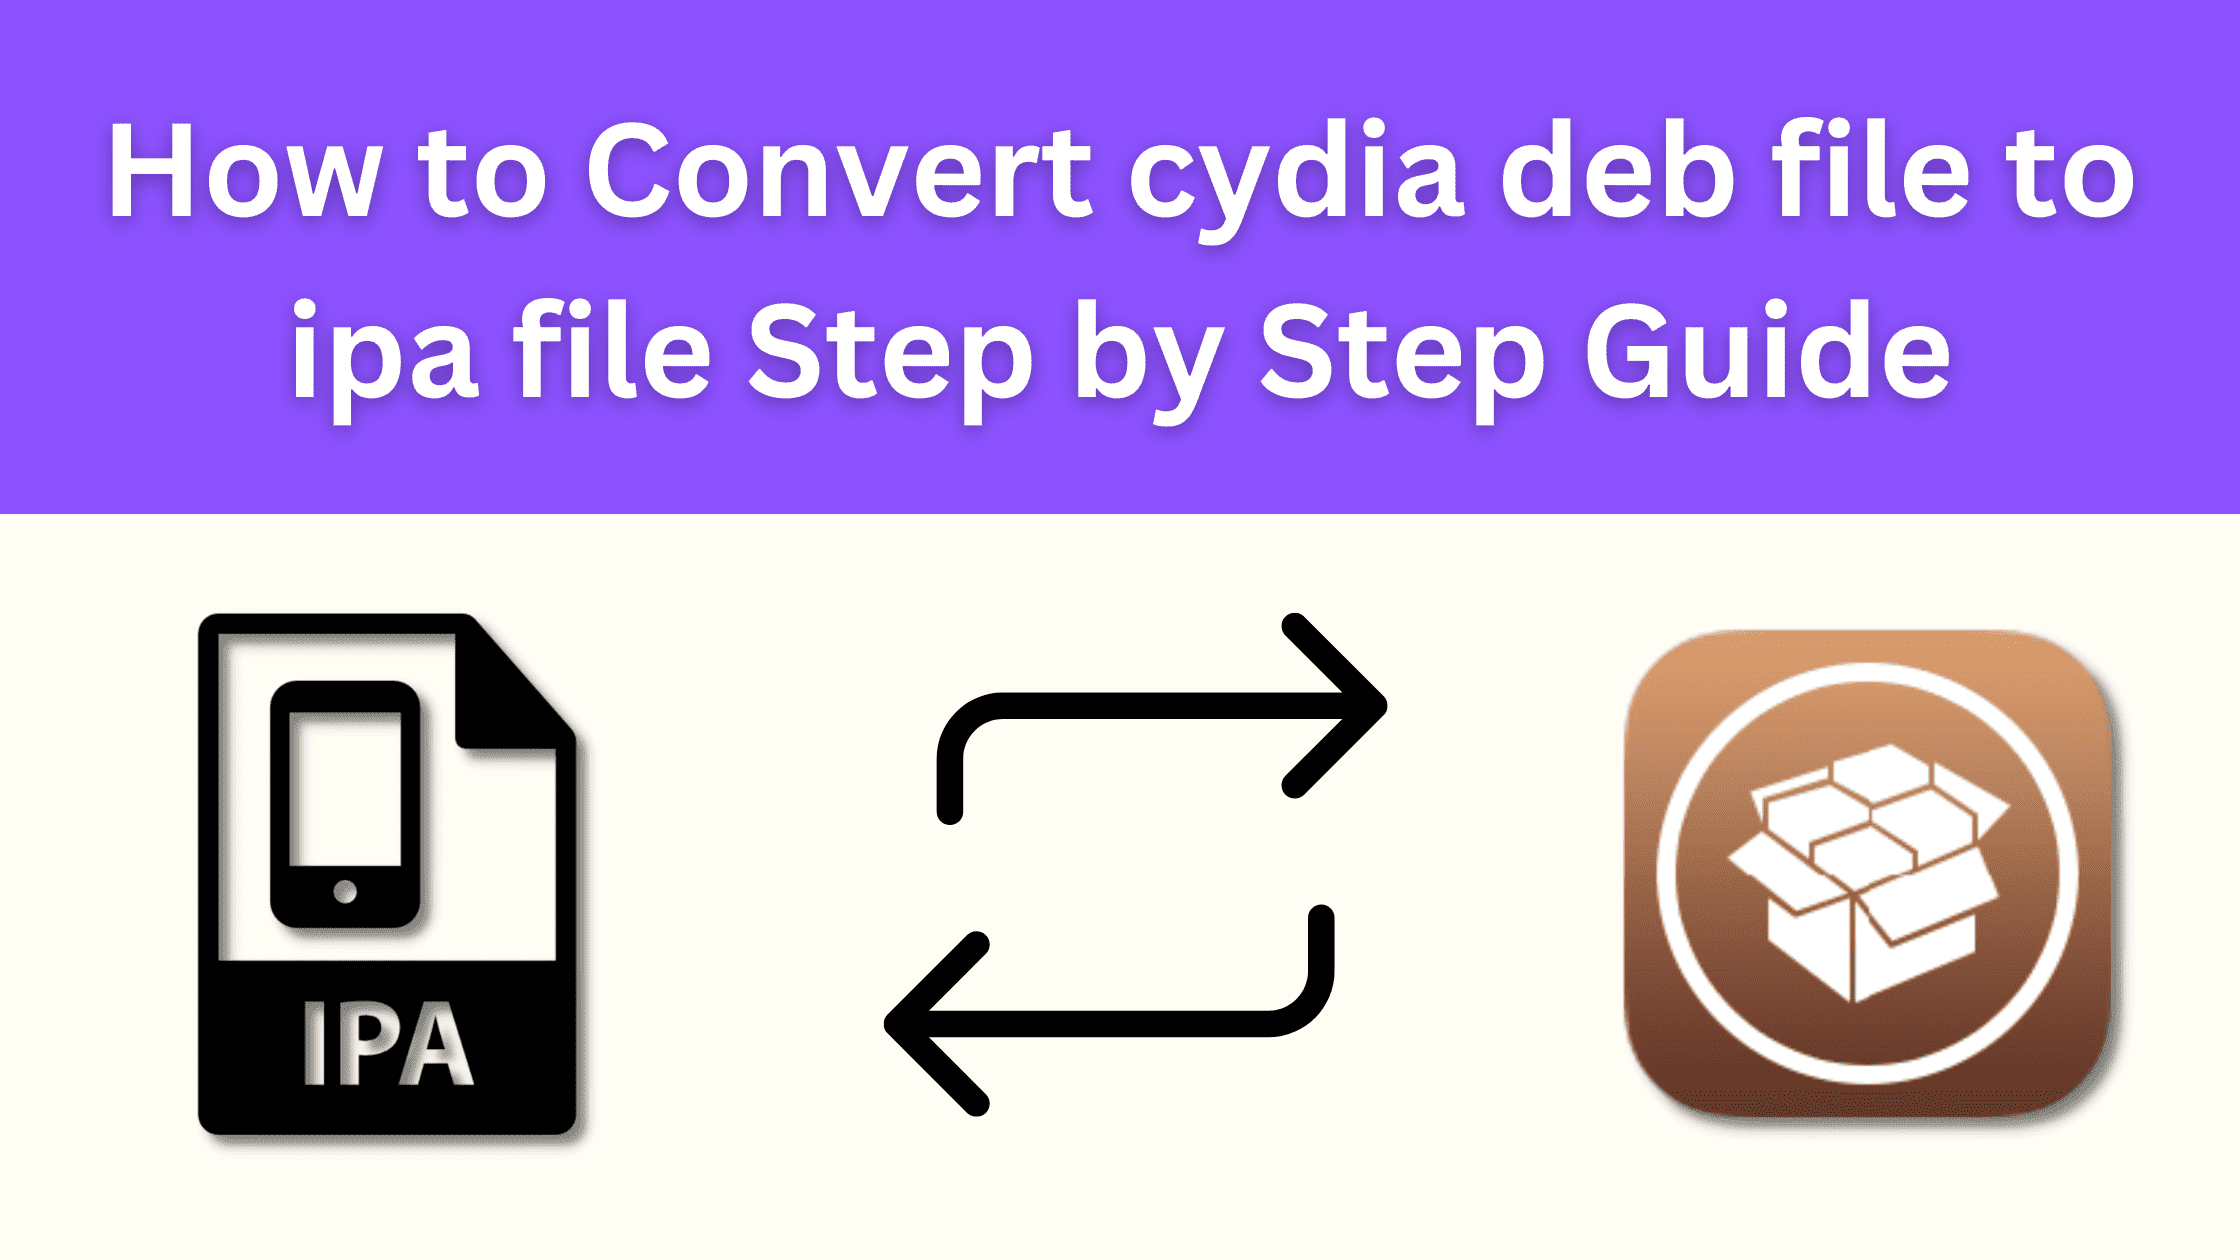 Convert cydia deb file to ipa